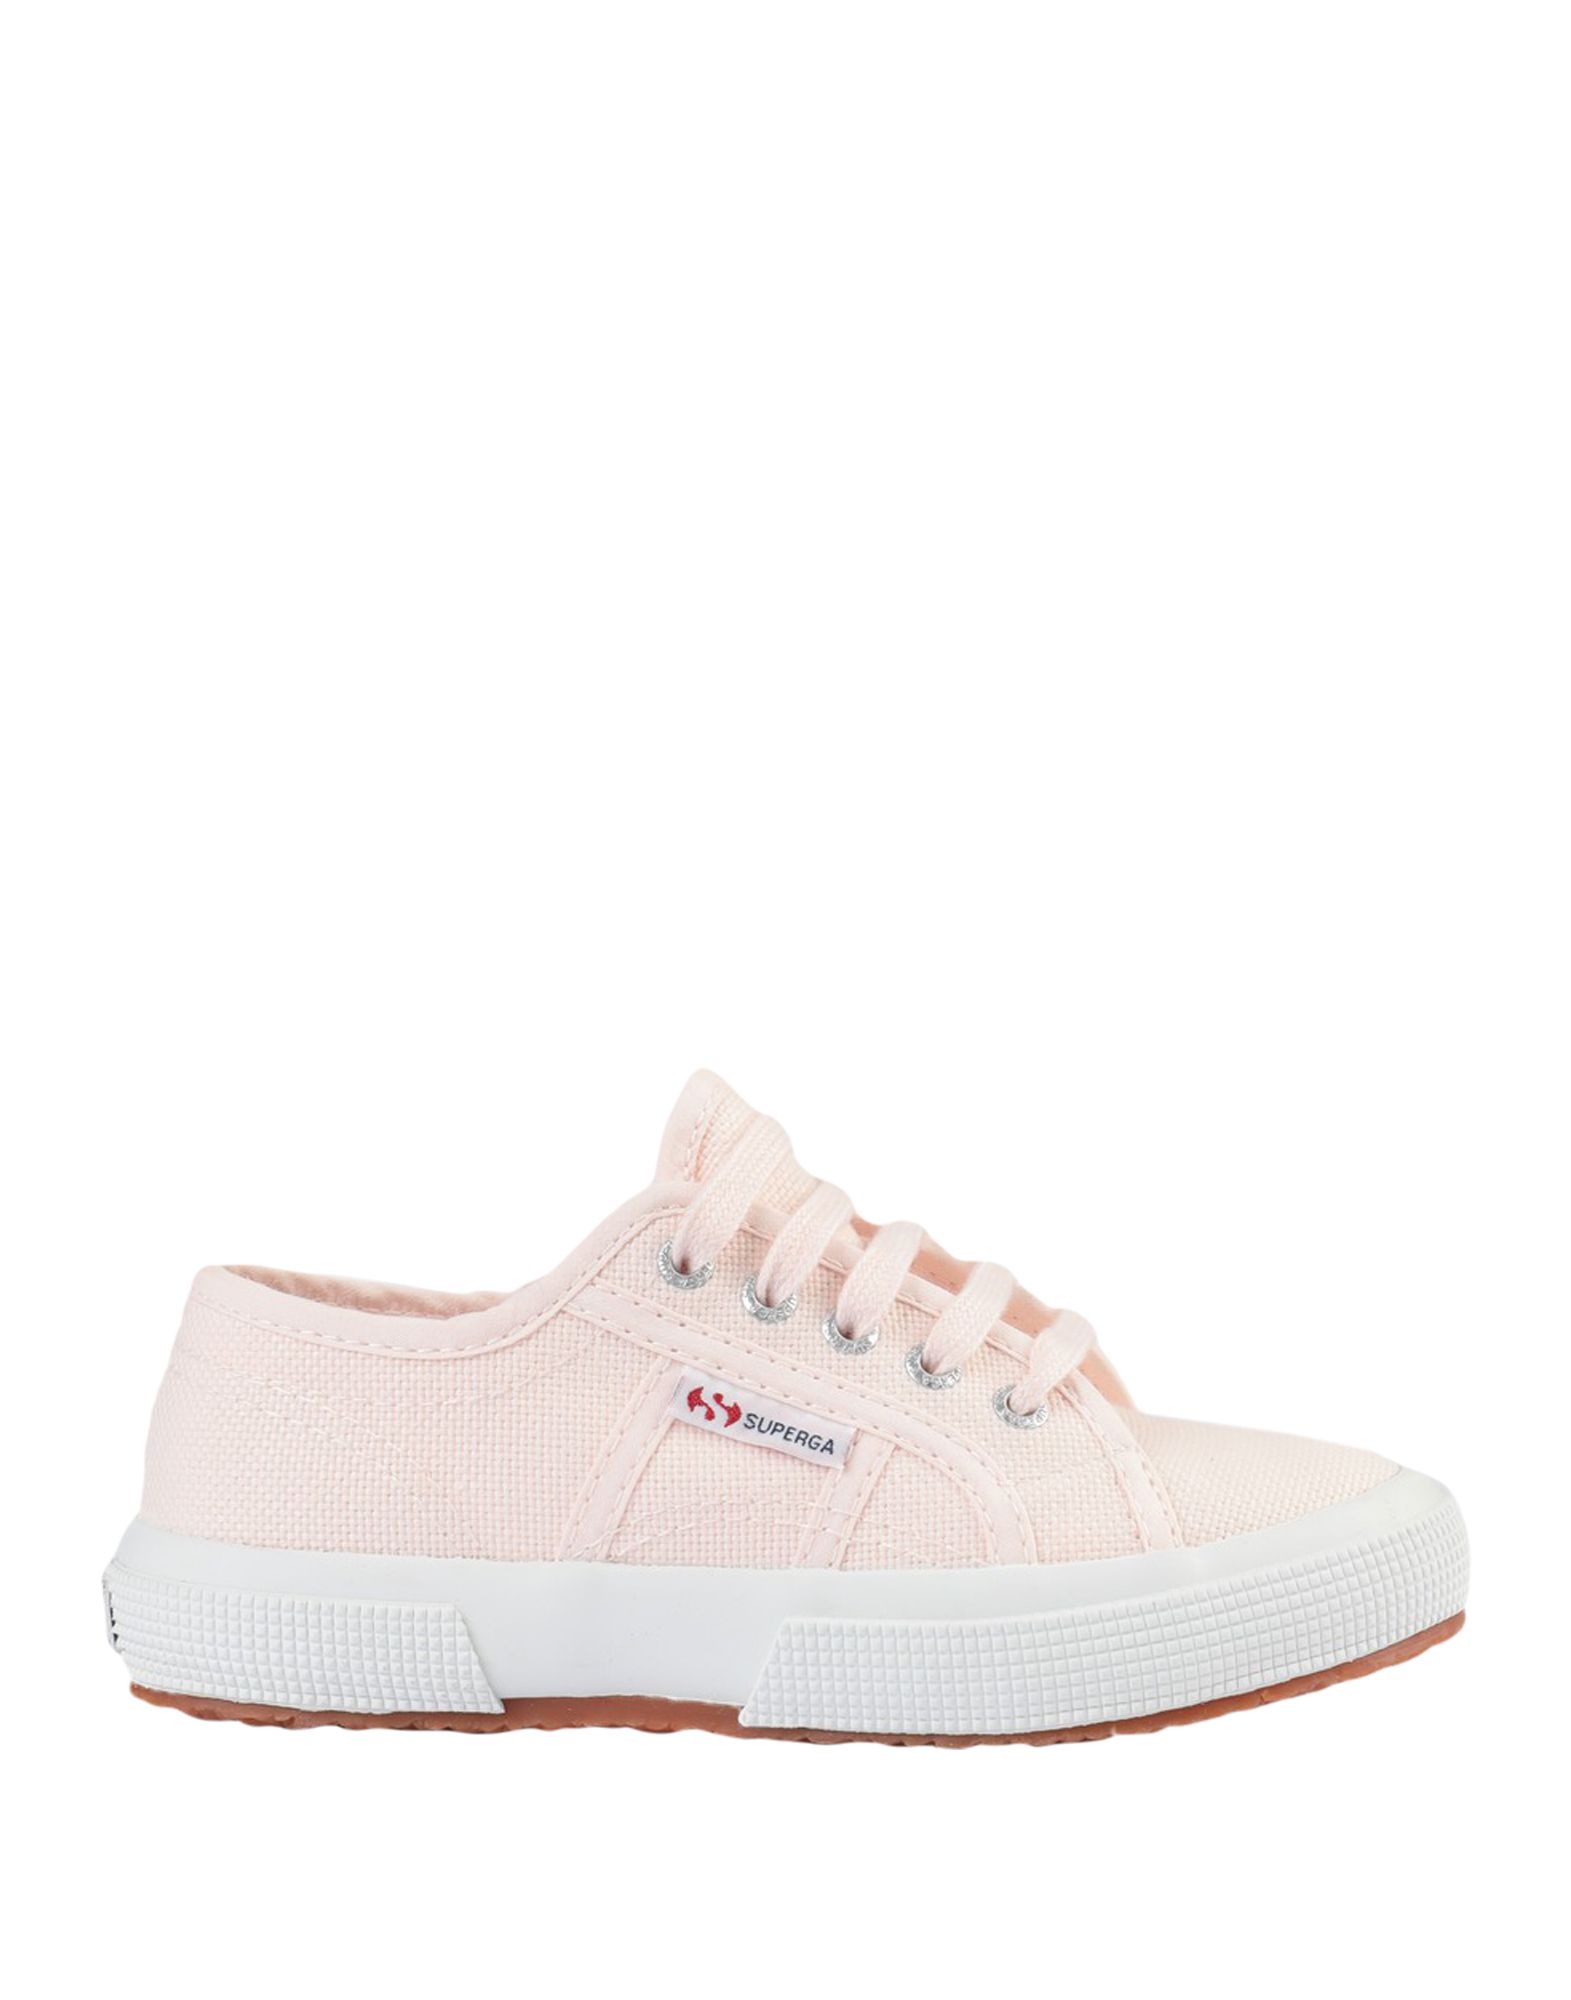 Shop Superga 2750-jcot Classic Toddler Sneakers Light Pink Size 10.5c Cotton